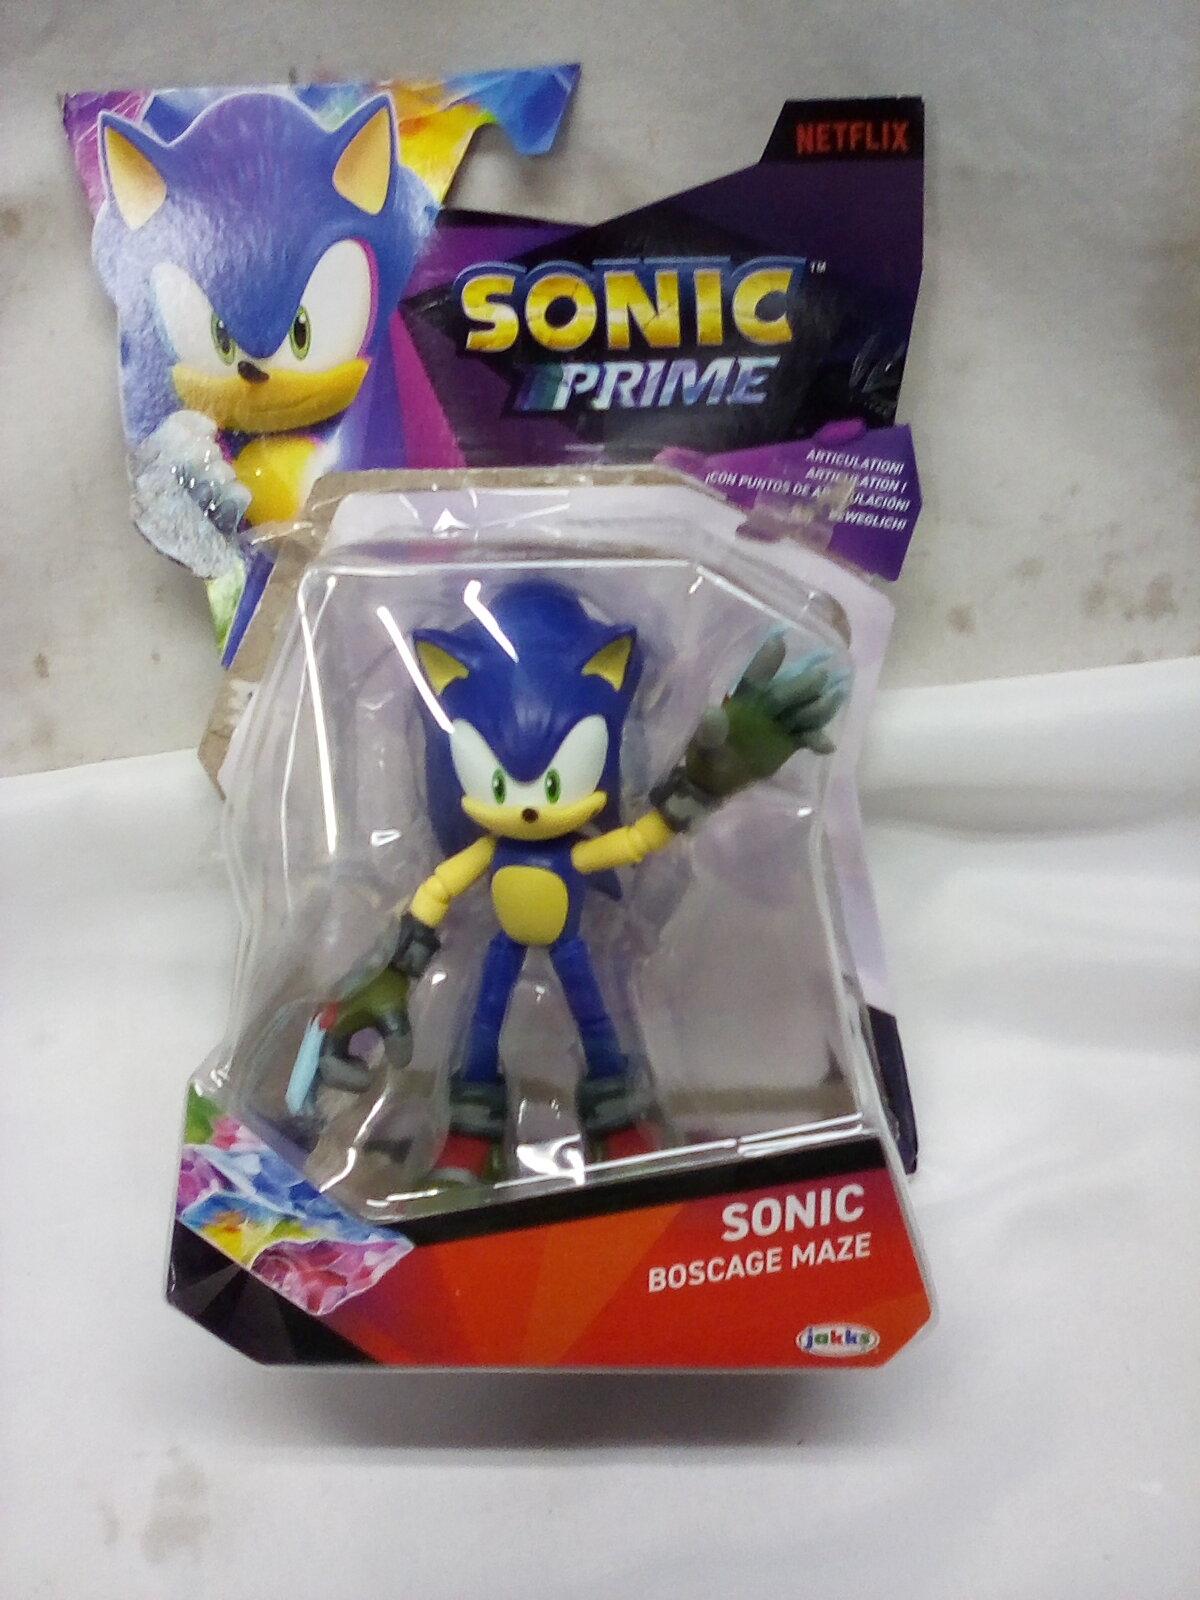 Sonic figurine